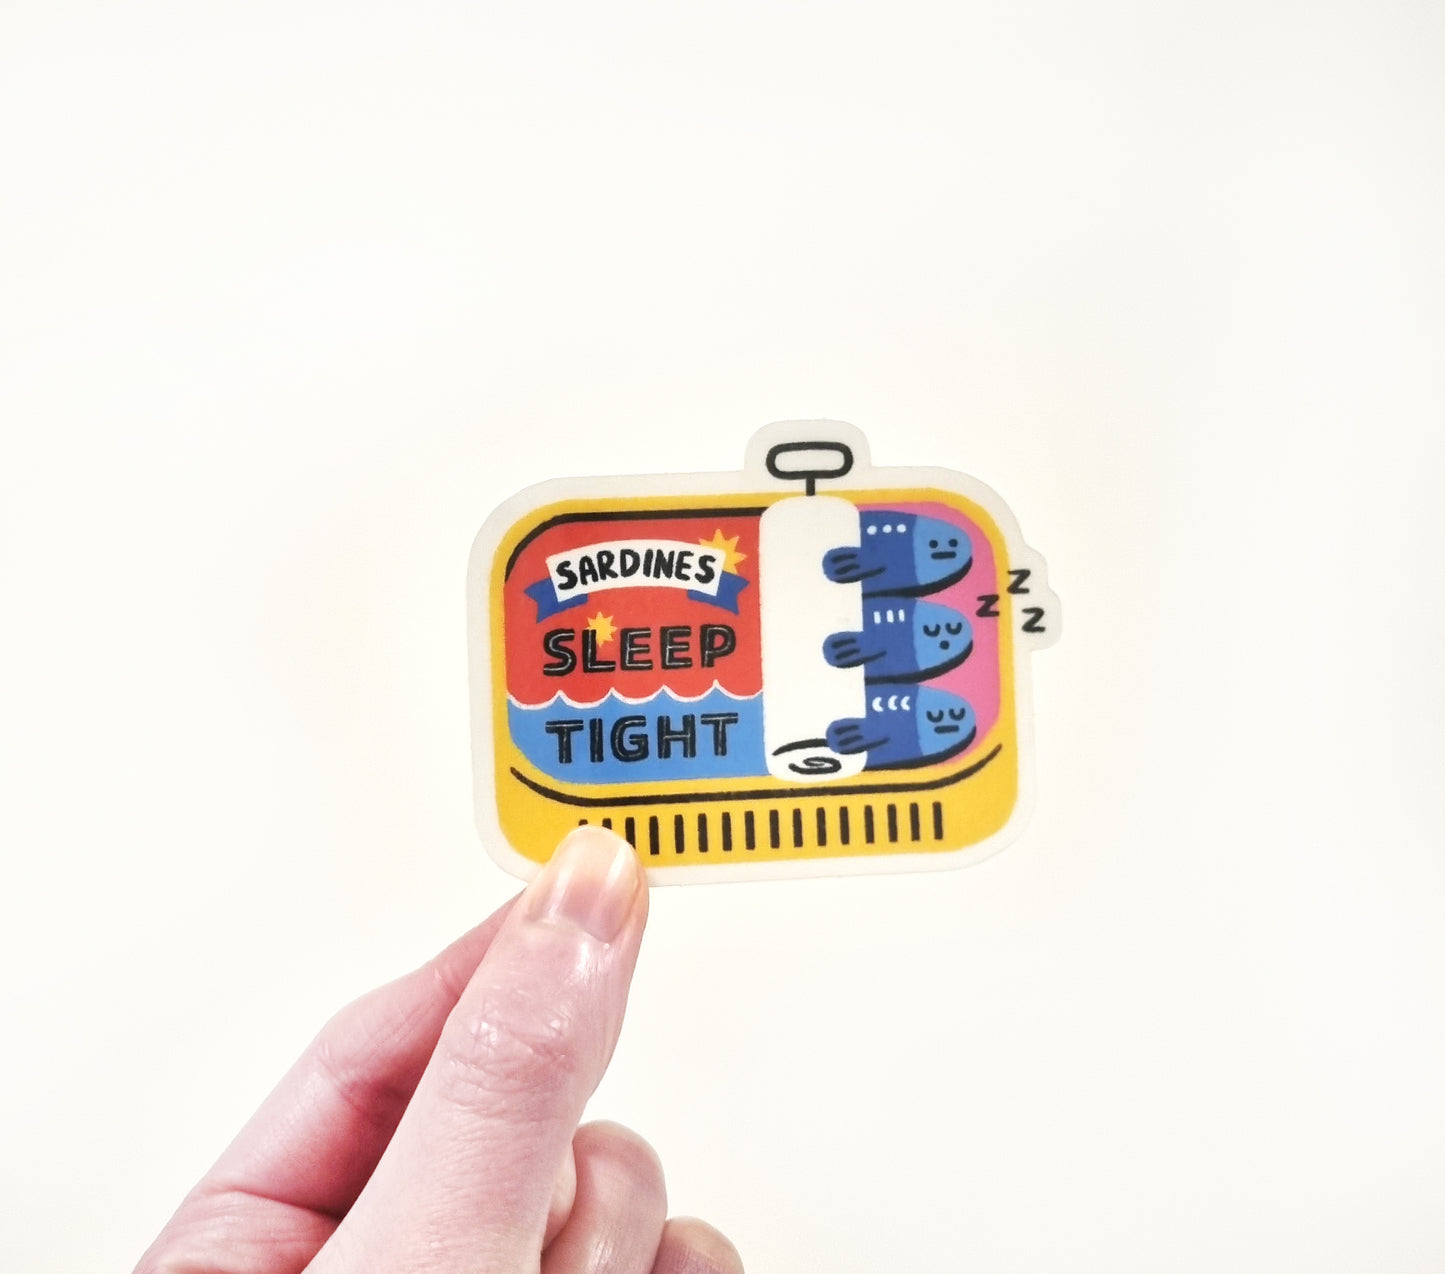 Sleep Tight Canned Sardines Sticker [PATREON]